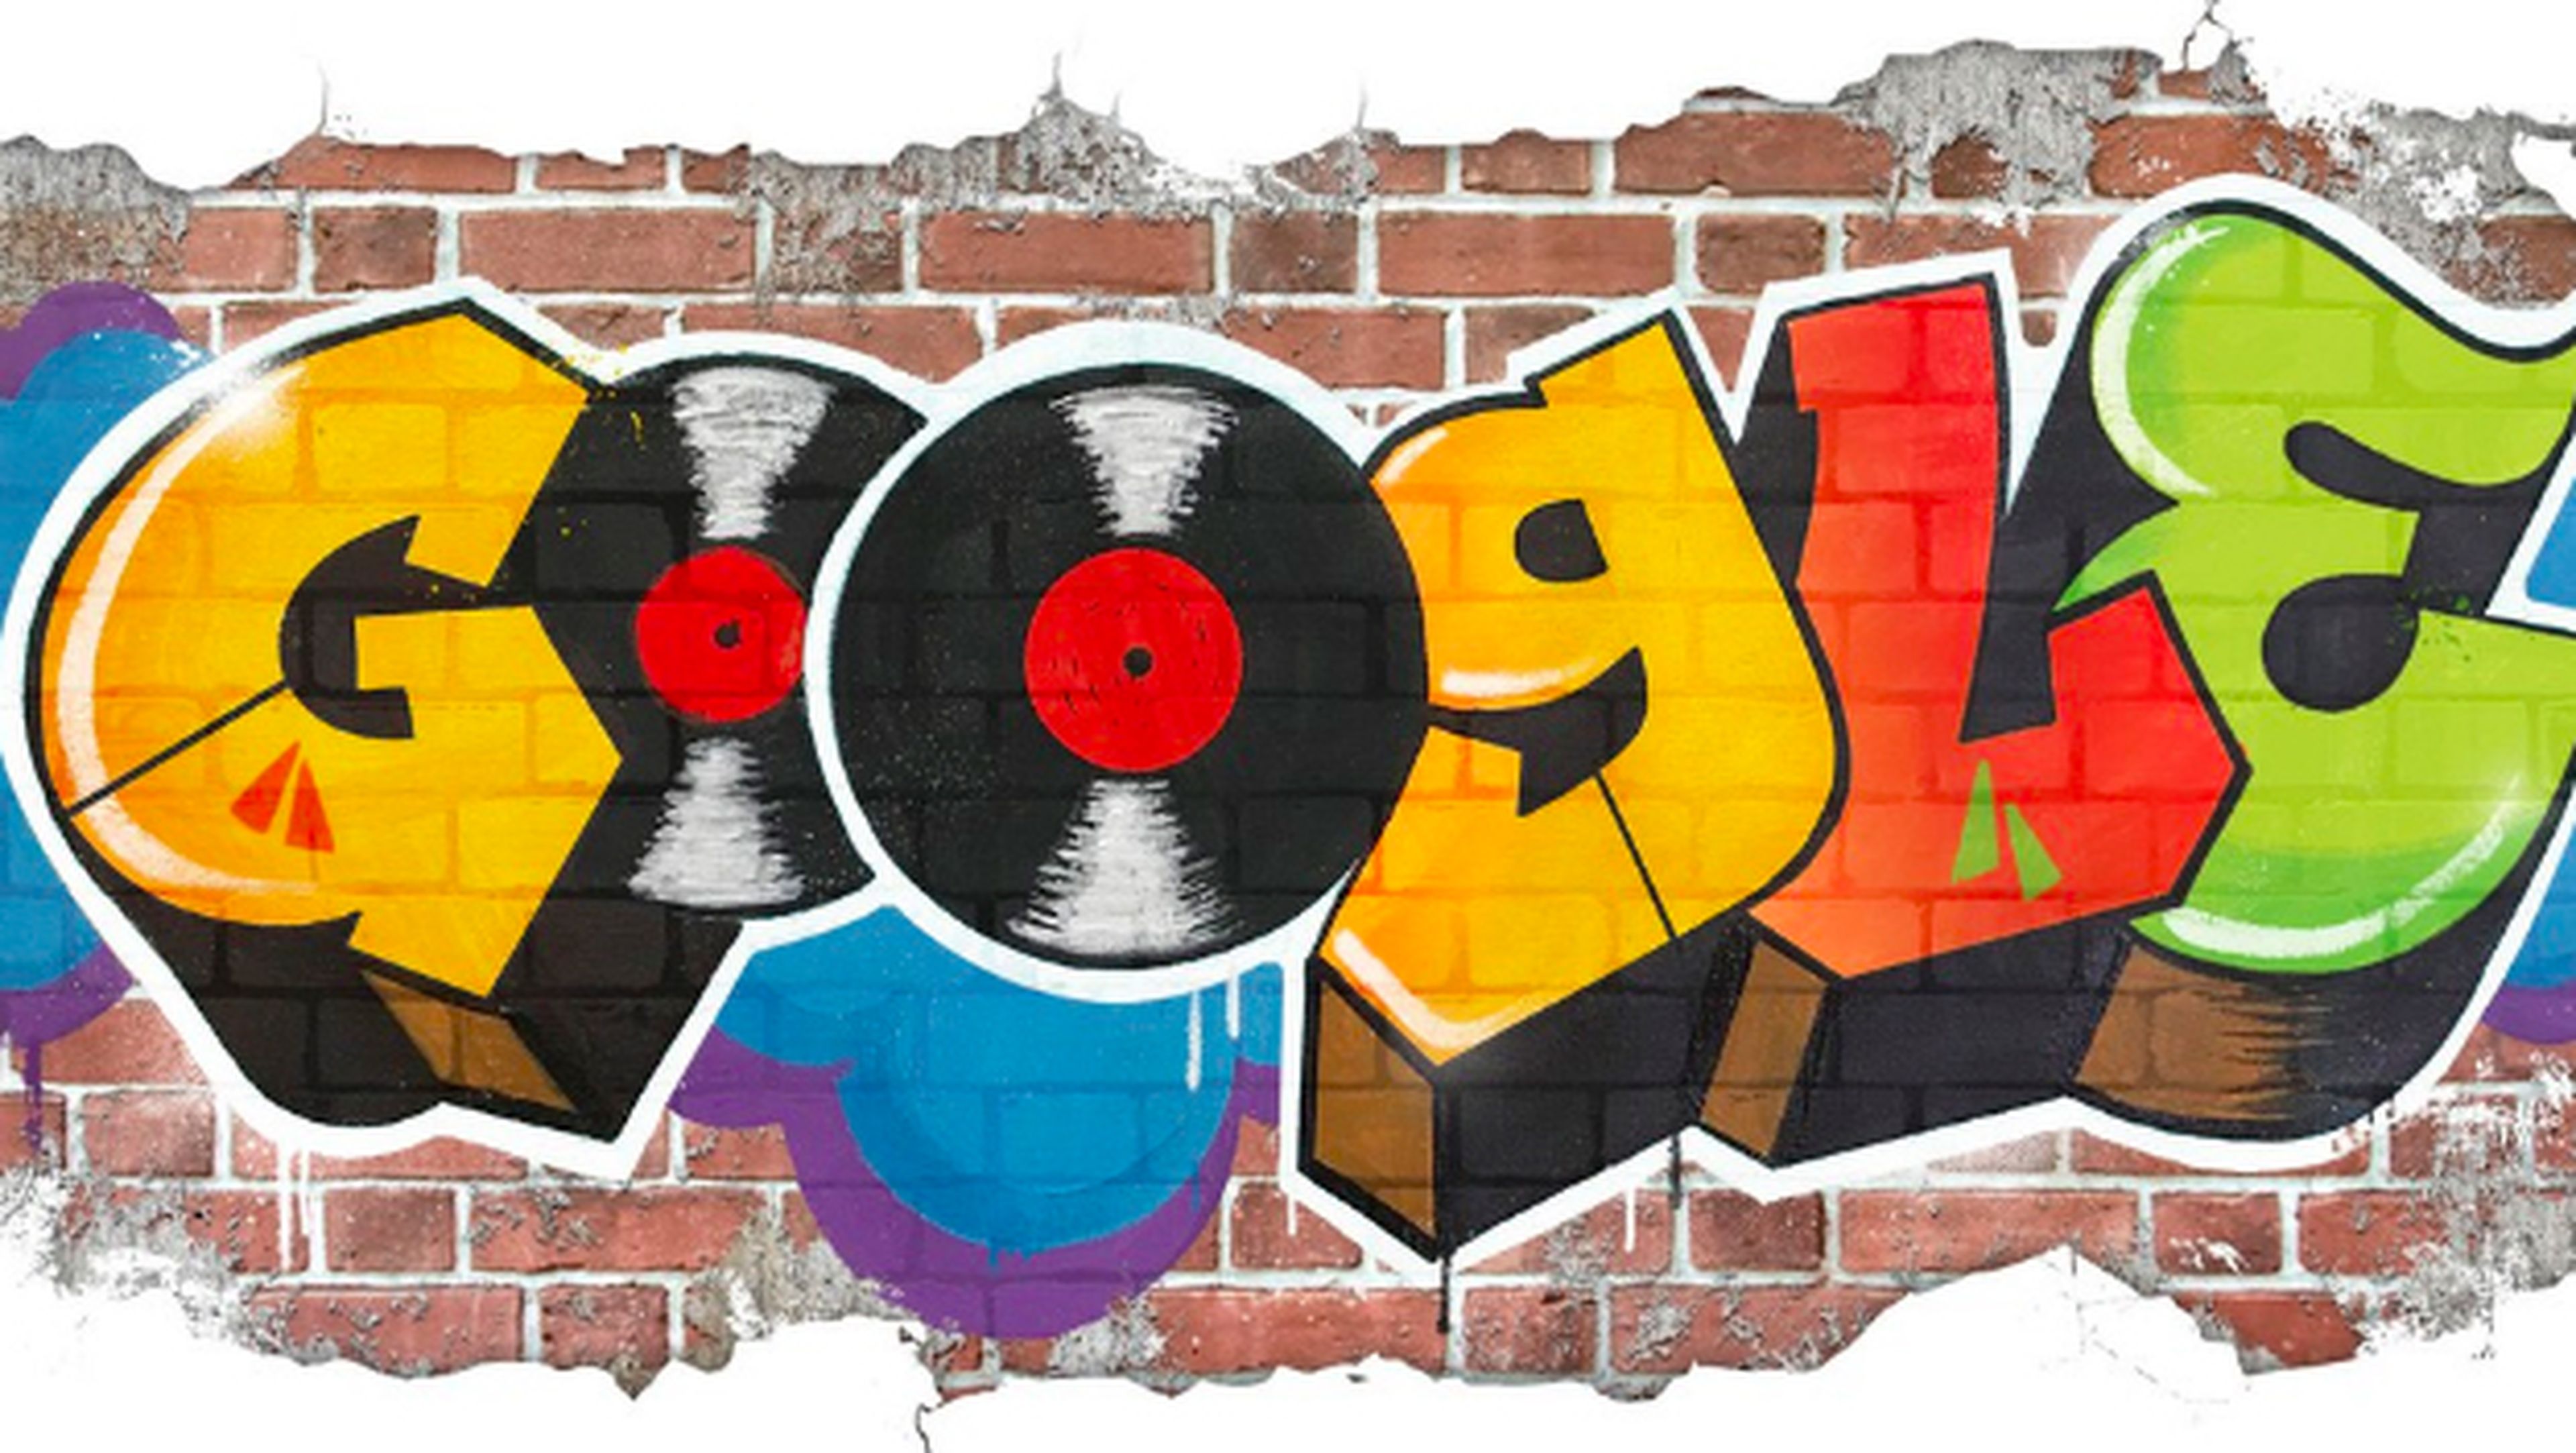 Google Doodle Hip Hop